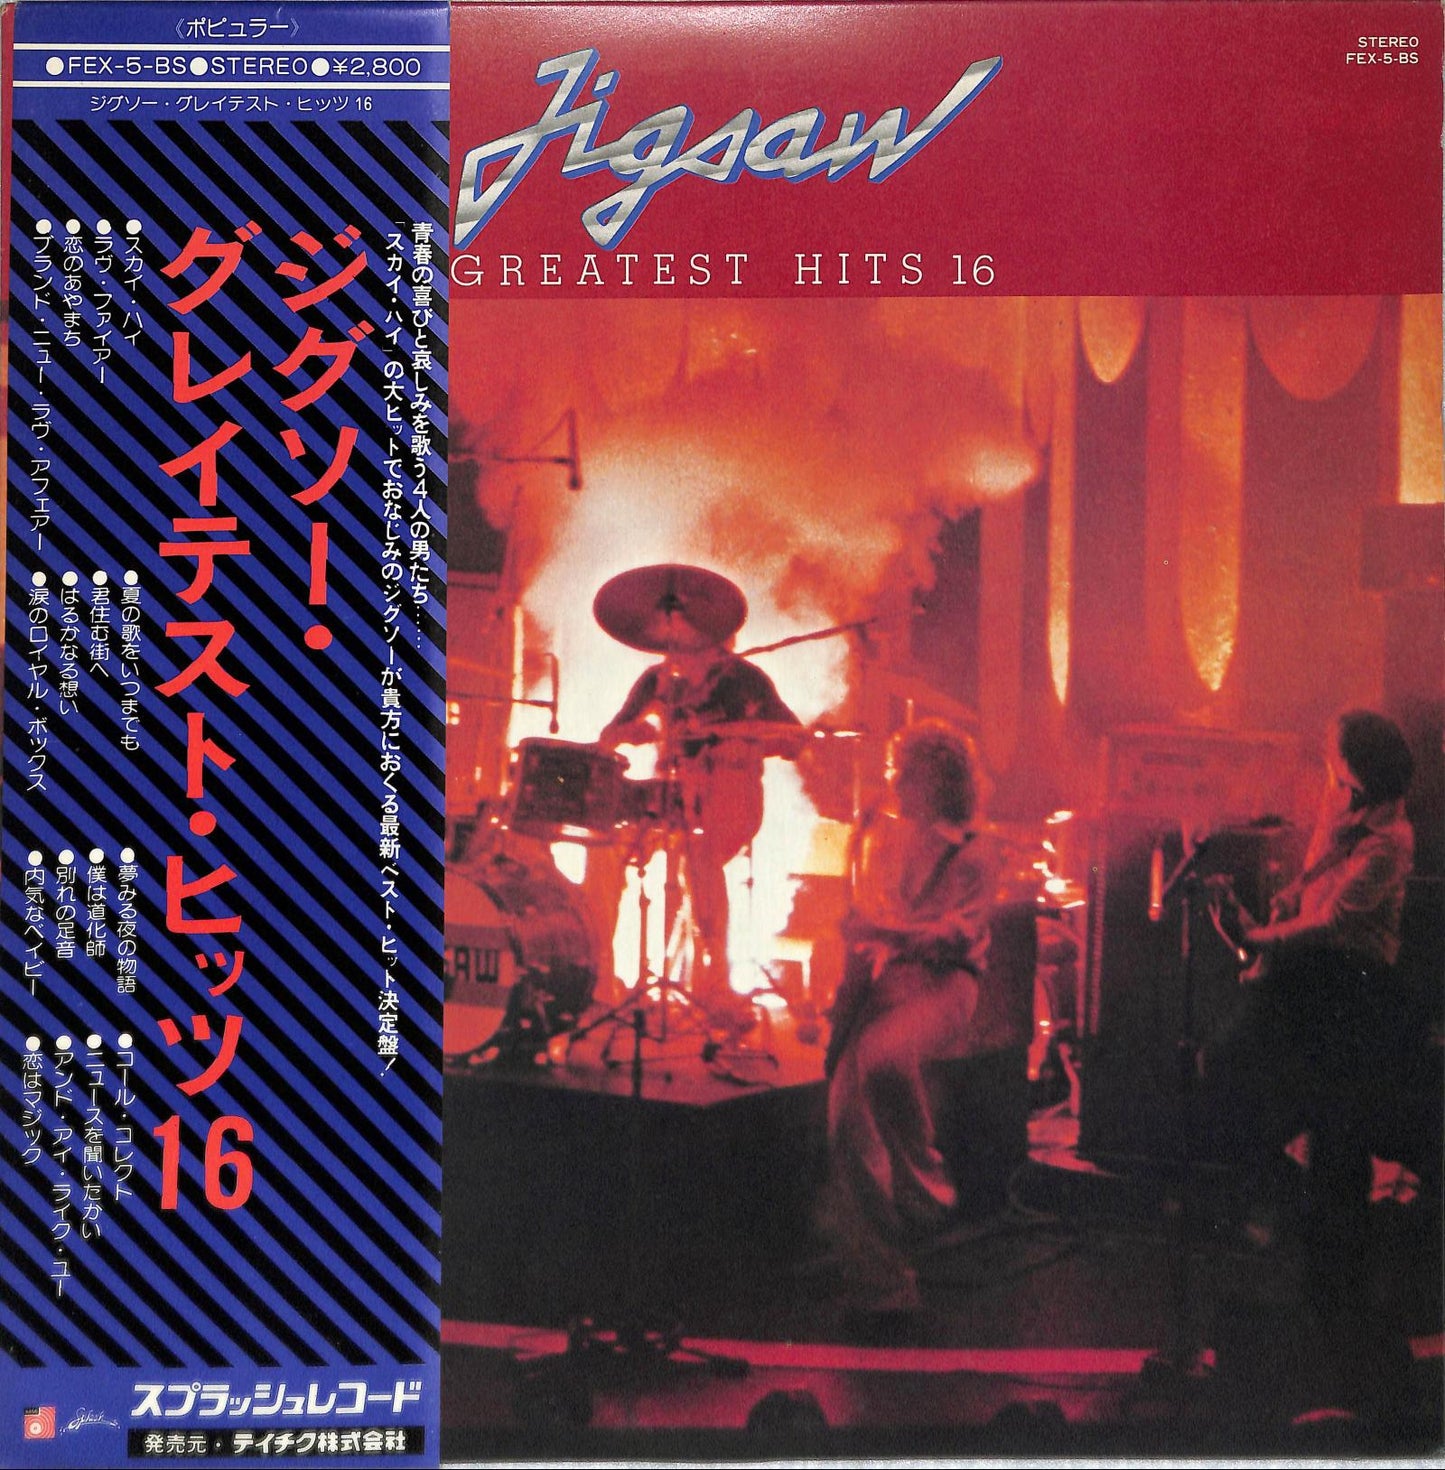 JIGSAW - Greatest Hits 16